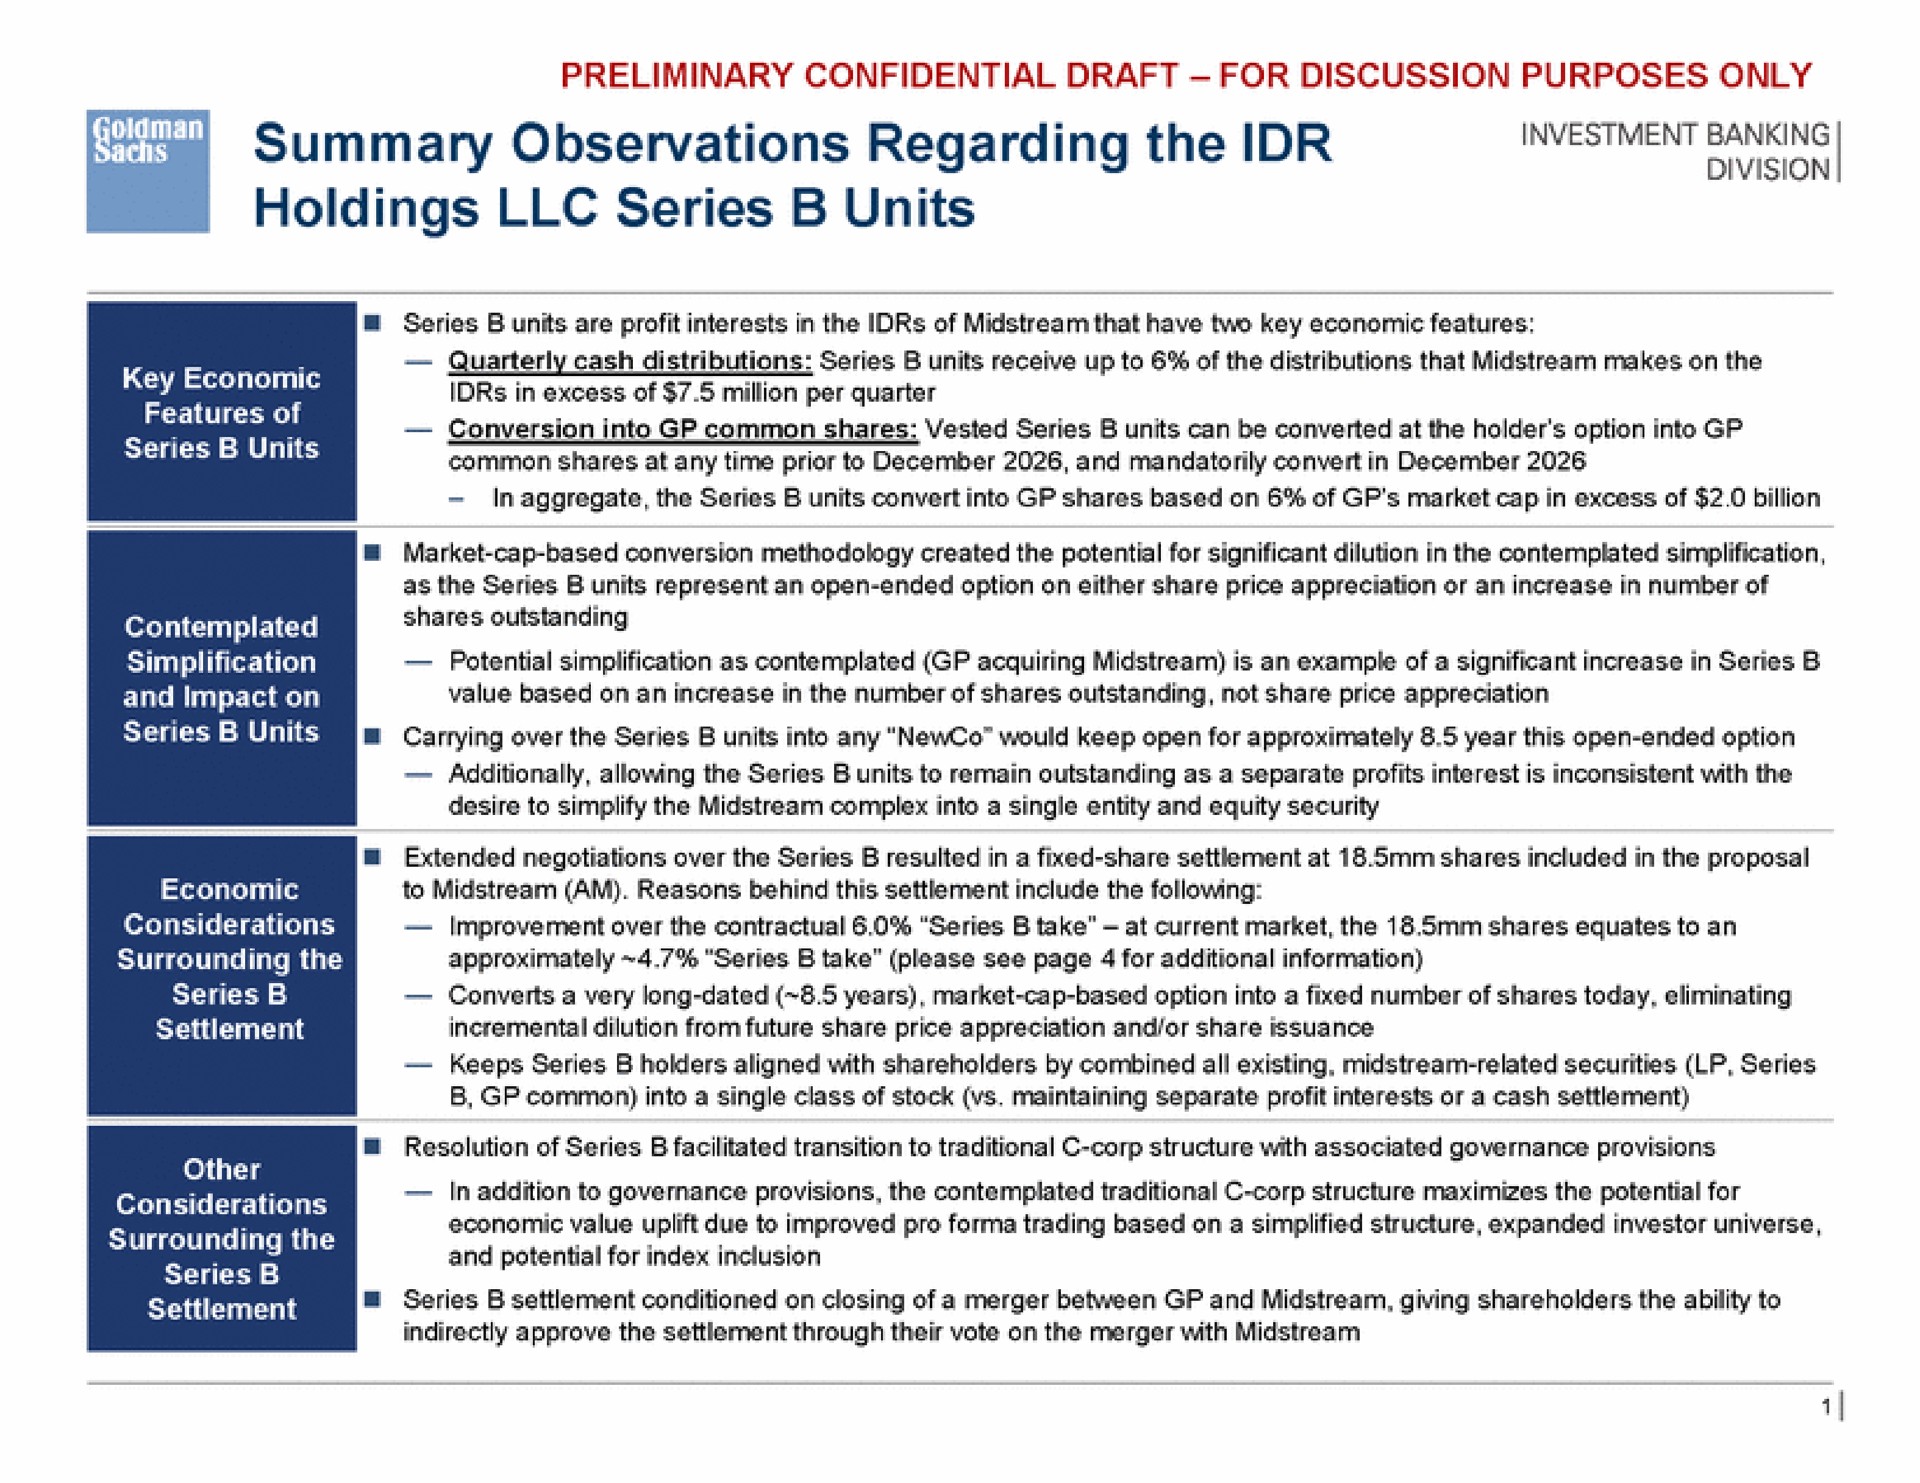 summary observations regarding the holdings series units | Goldman Sachs